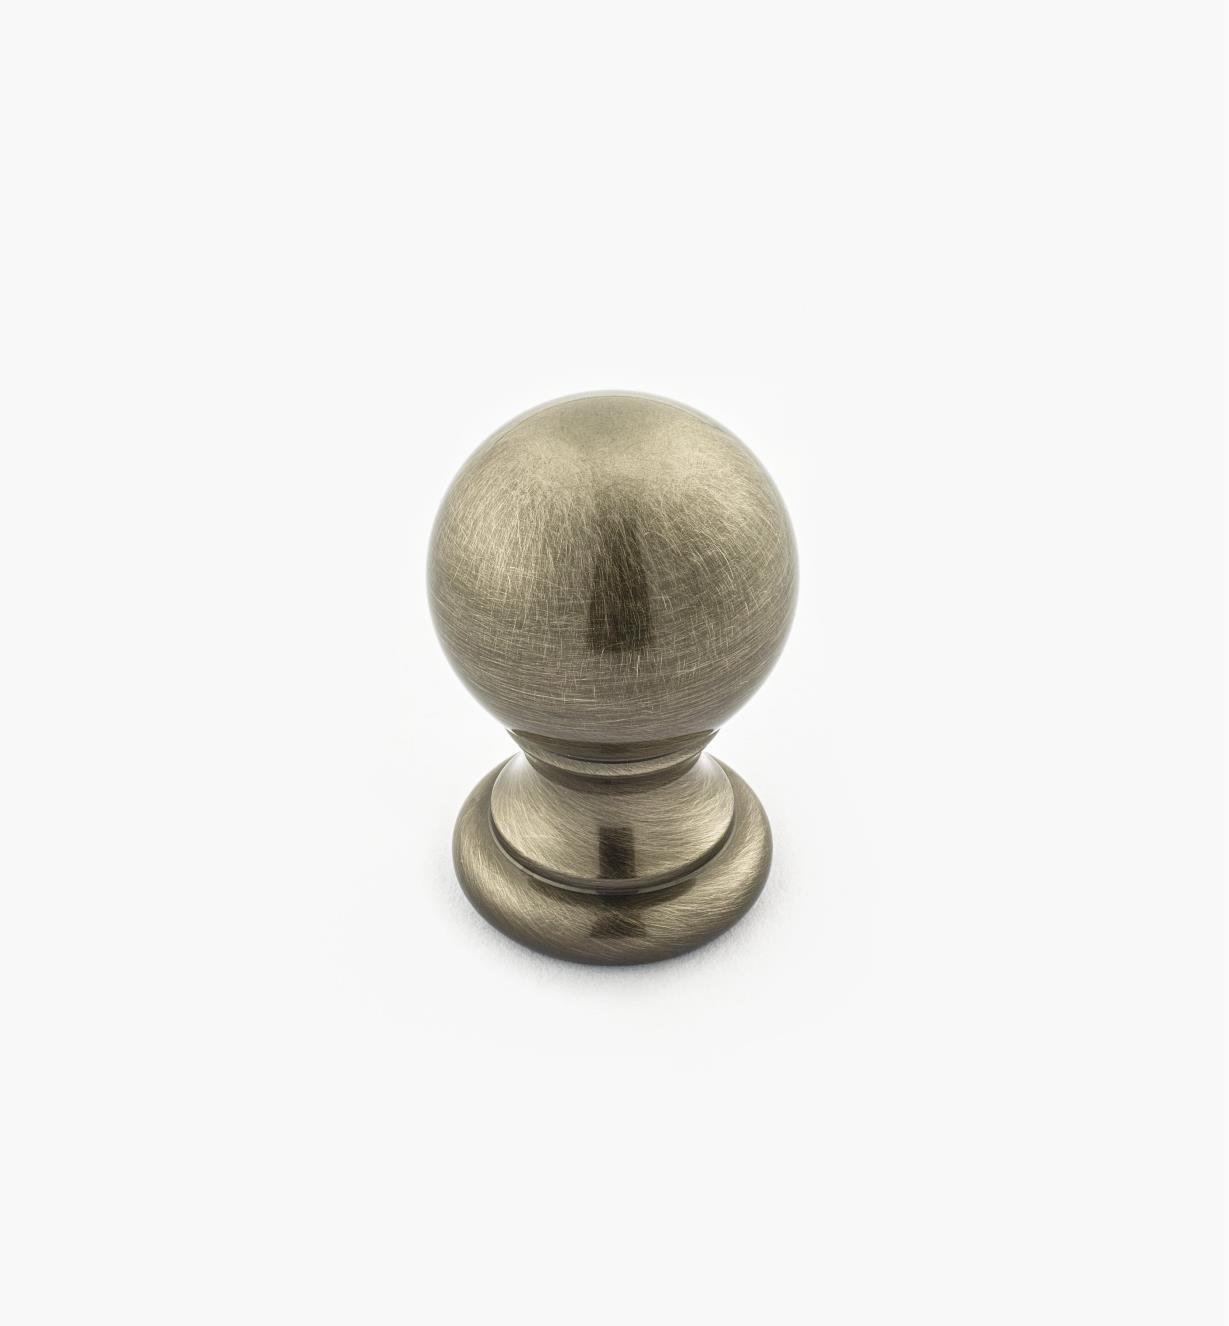 02W3303 - Antique Nickel Suite - 7/8" x 1 1/4" Turned Brass Ball Knob